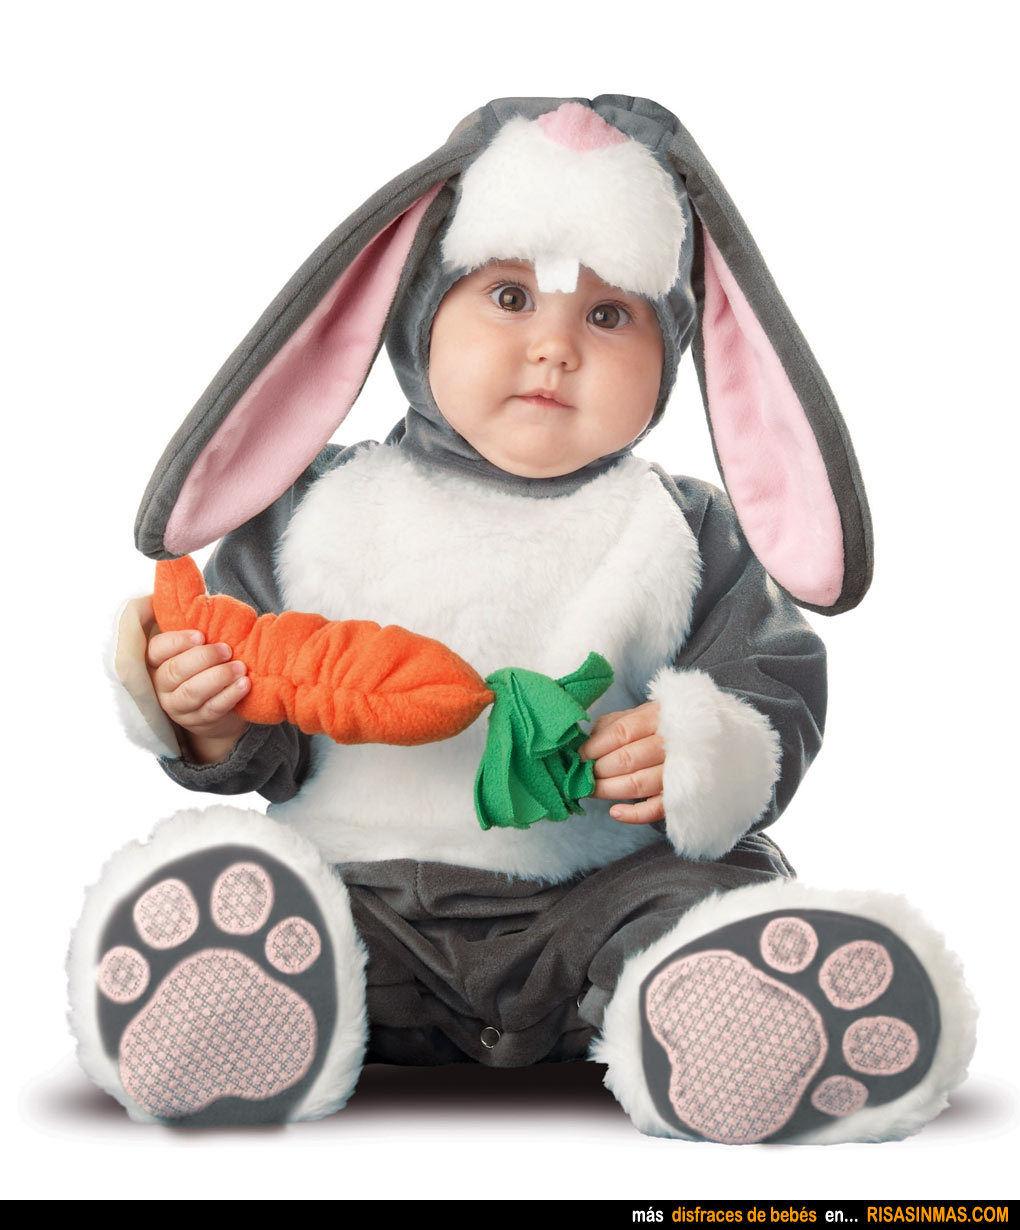 Disfraces de bebés: Conejo